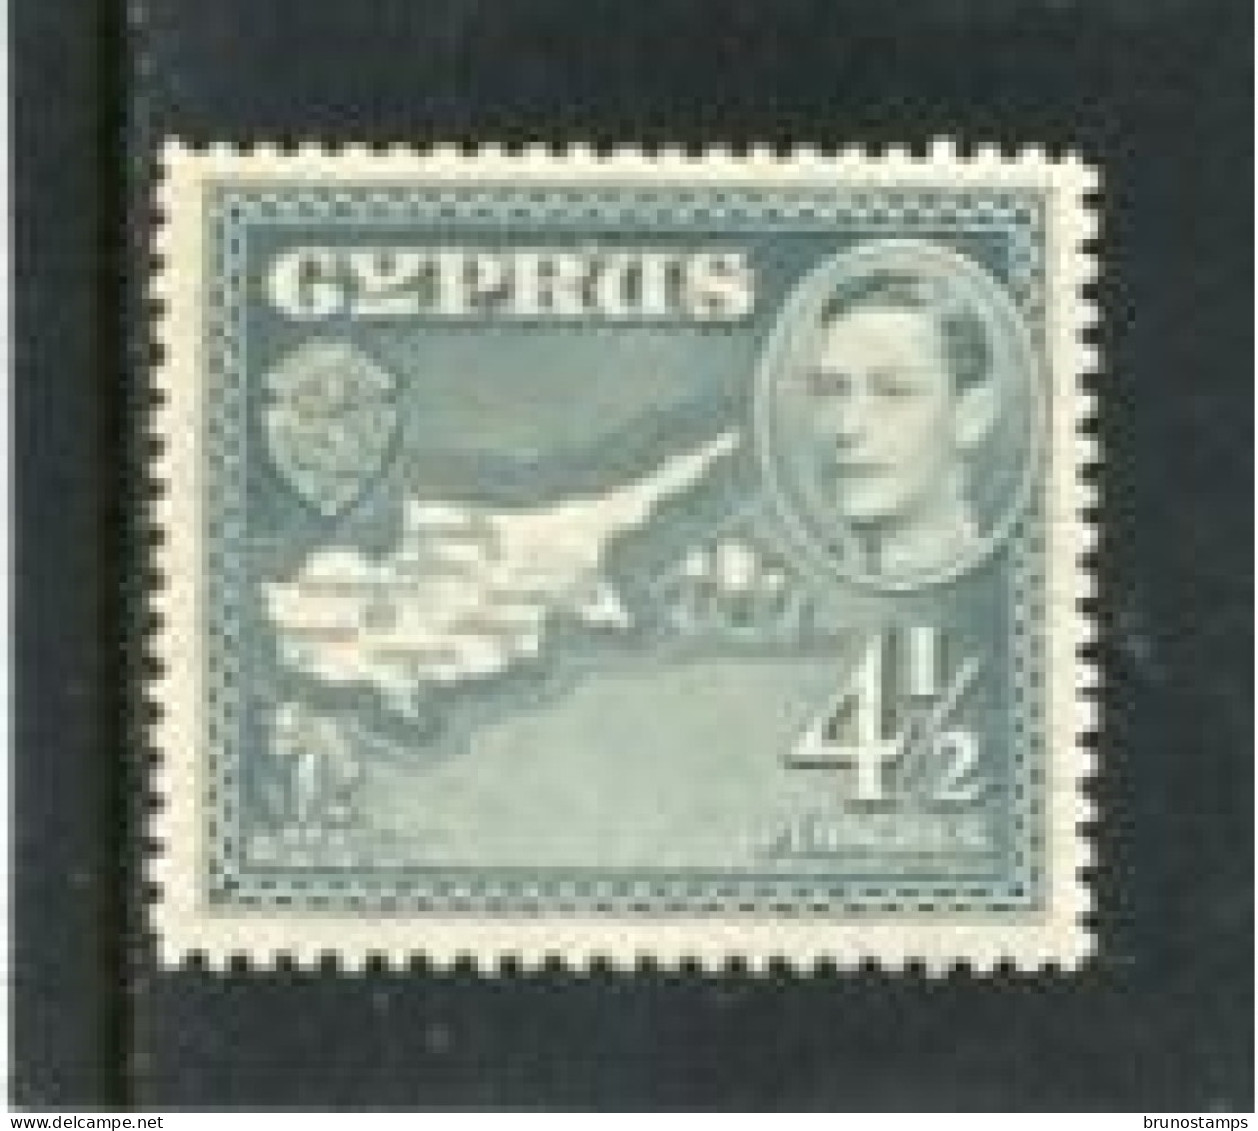 CYPRUS - 1938  GEORGE VI  4 1/2 Pi  MINT - Cyprus (...-1960)